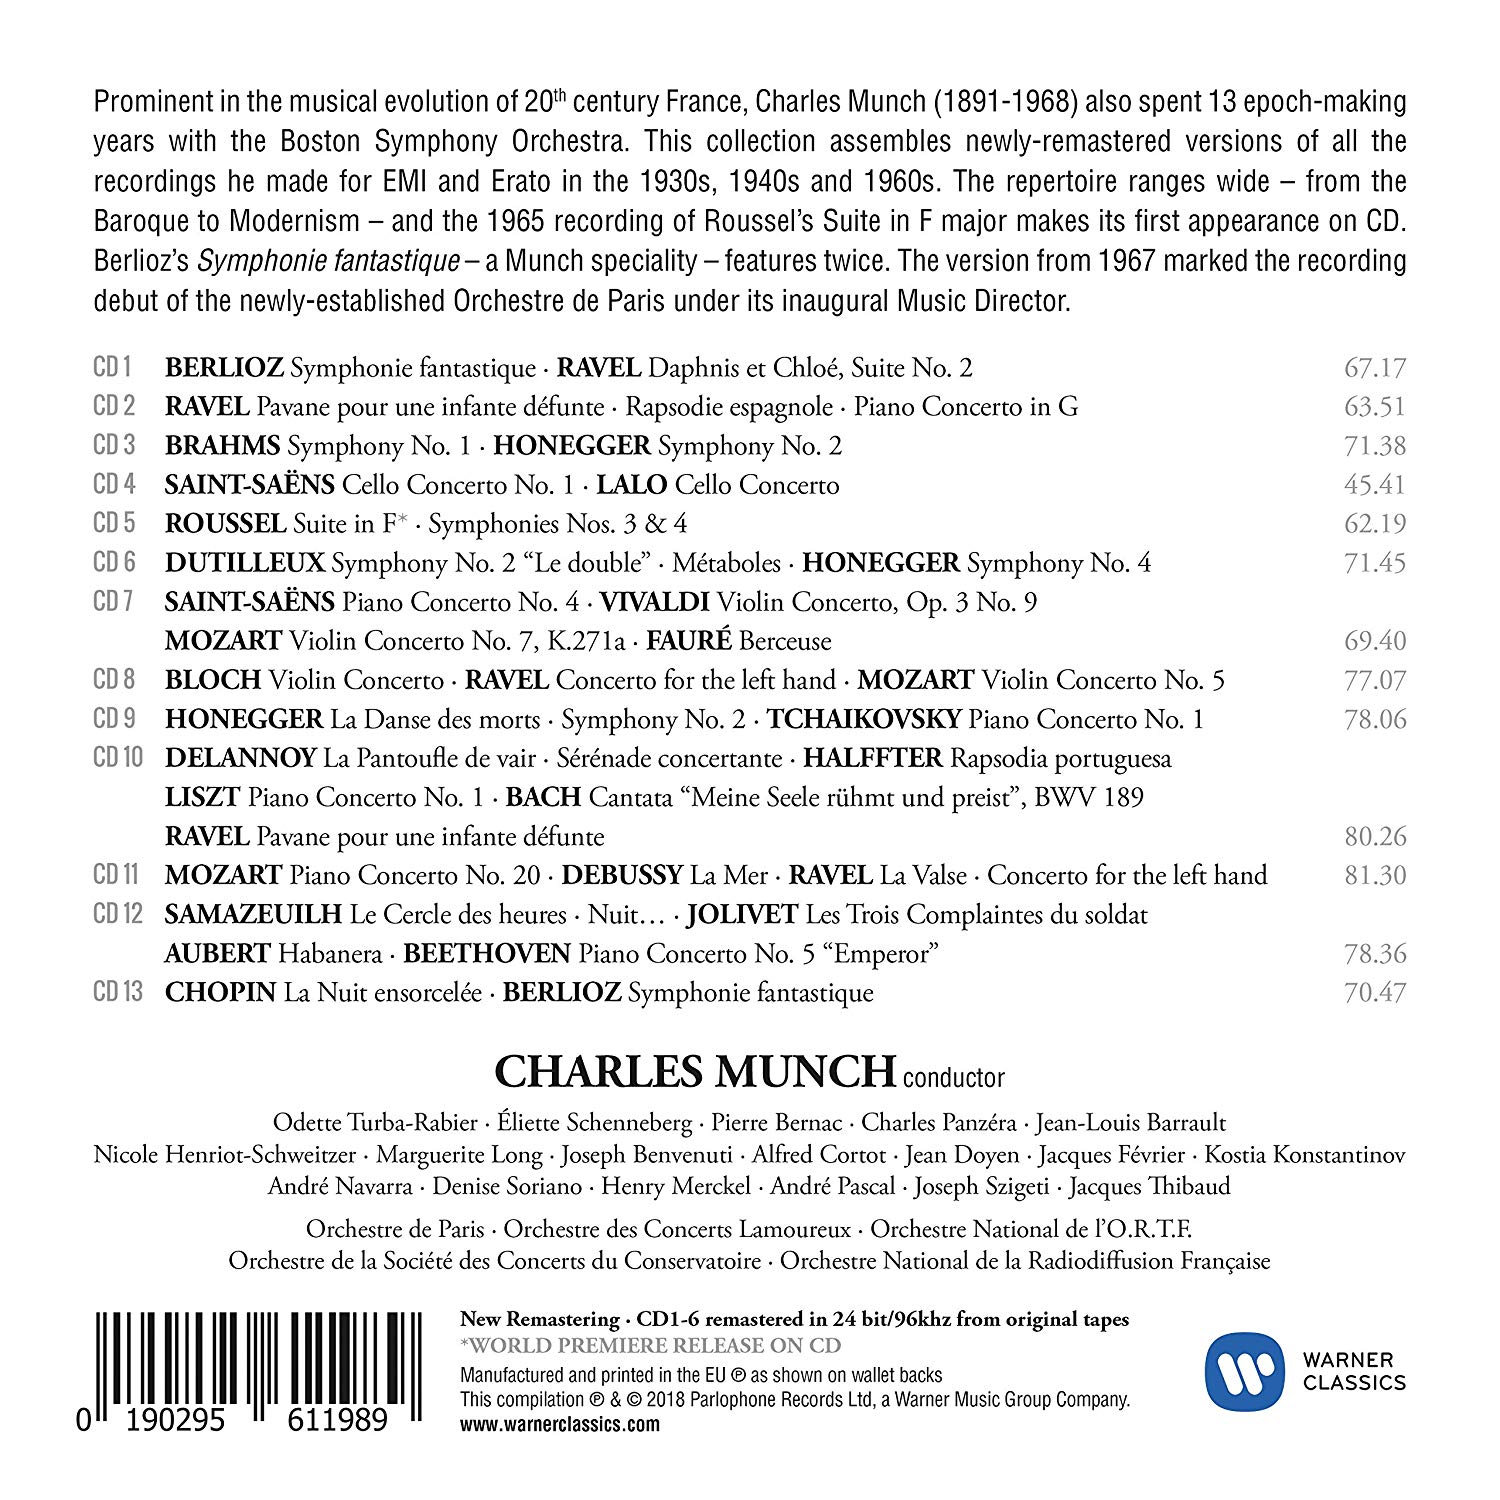 Charles Munch 샤를 뮌시 워너 녹음 전집 (The Complete Recordings on Warner Classics)